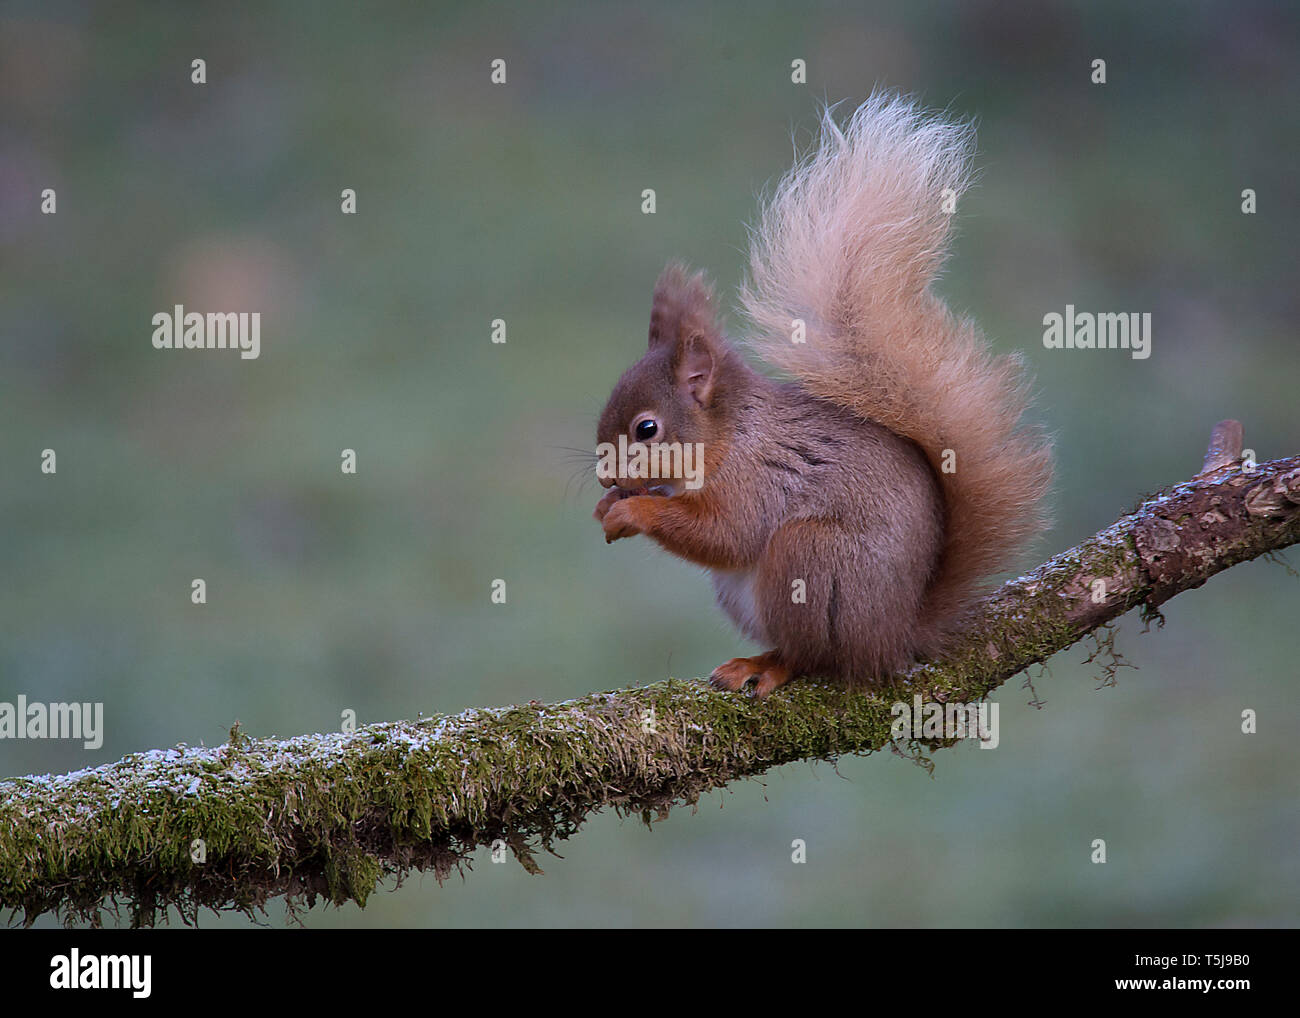 Scottish red squirrel feeing on log, Dumfries Scotland Stock Photo